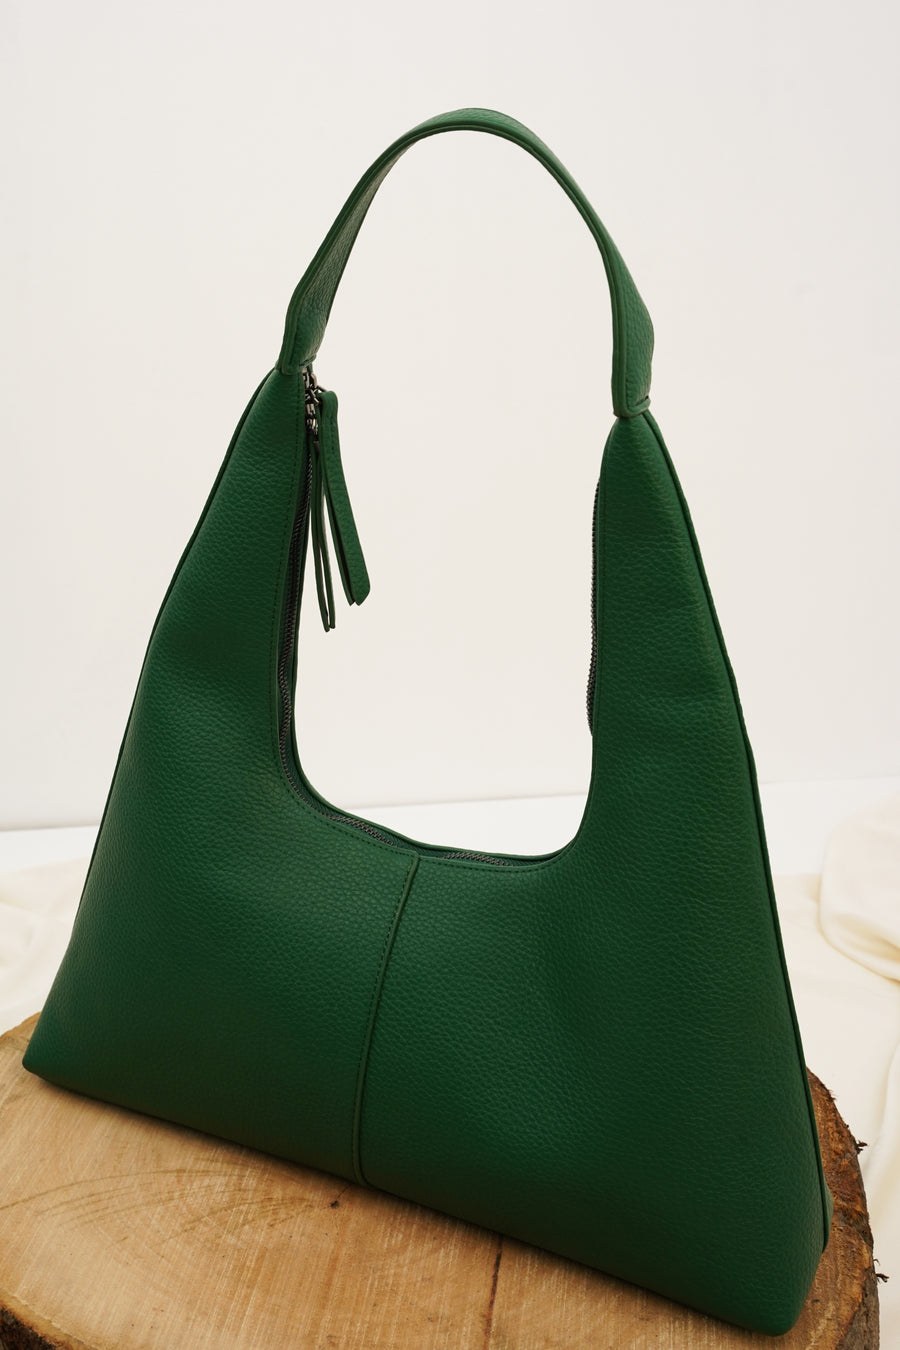 Women's Bag Green Collection best Price in Bangladesh Buy online klubhaus bd 2